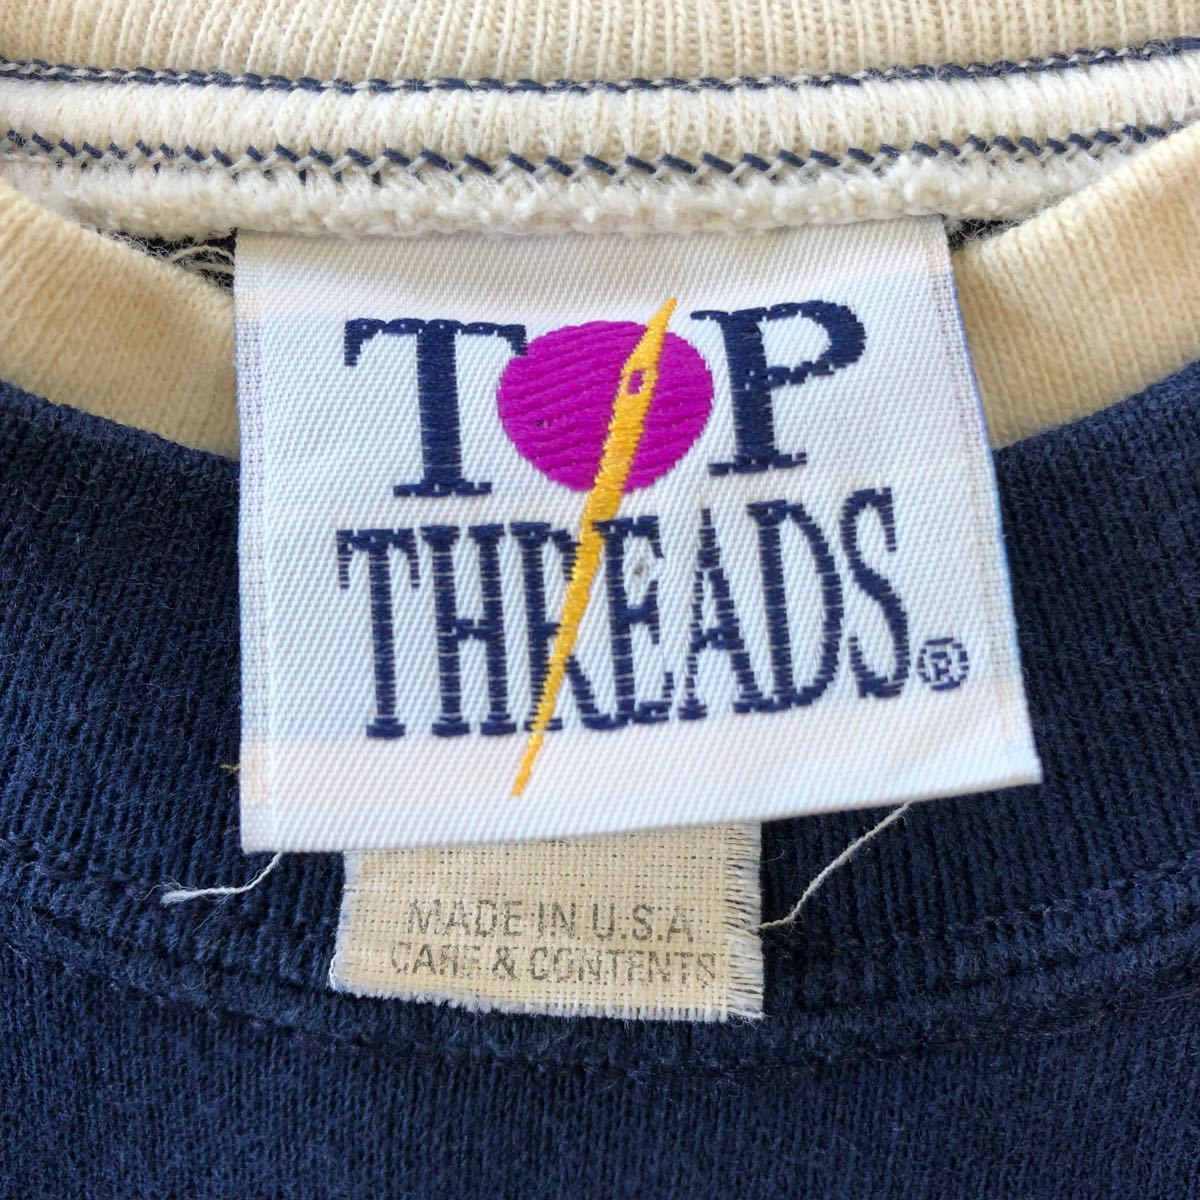 【TOP THREADS】made in USA ティーカップ刺繍 スウェット 長袖 ヴィンテージ 重ね着風 トレーナー  裏起毛